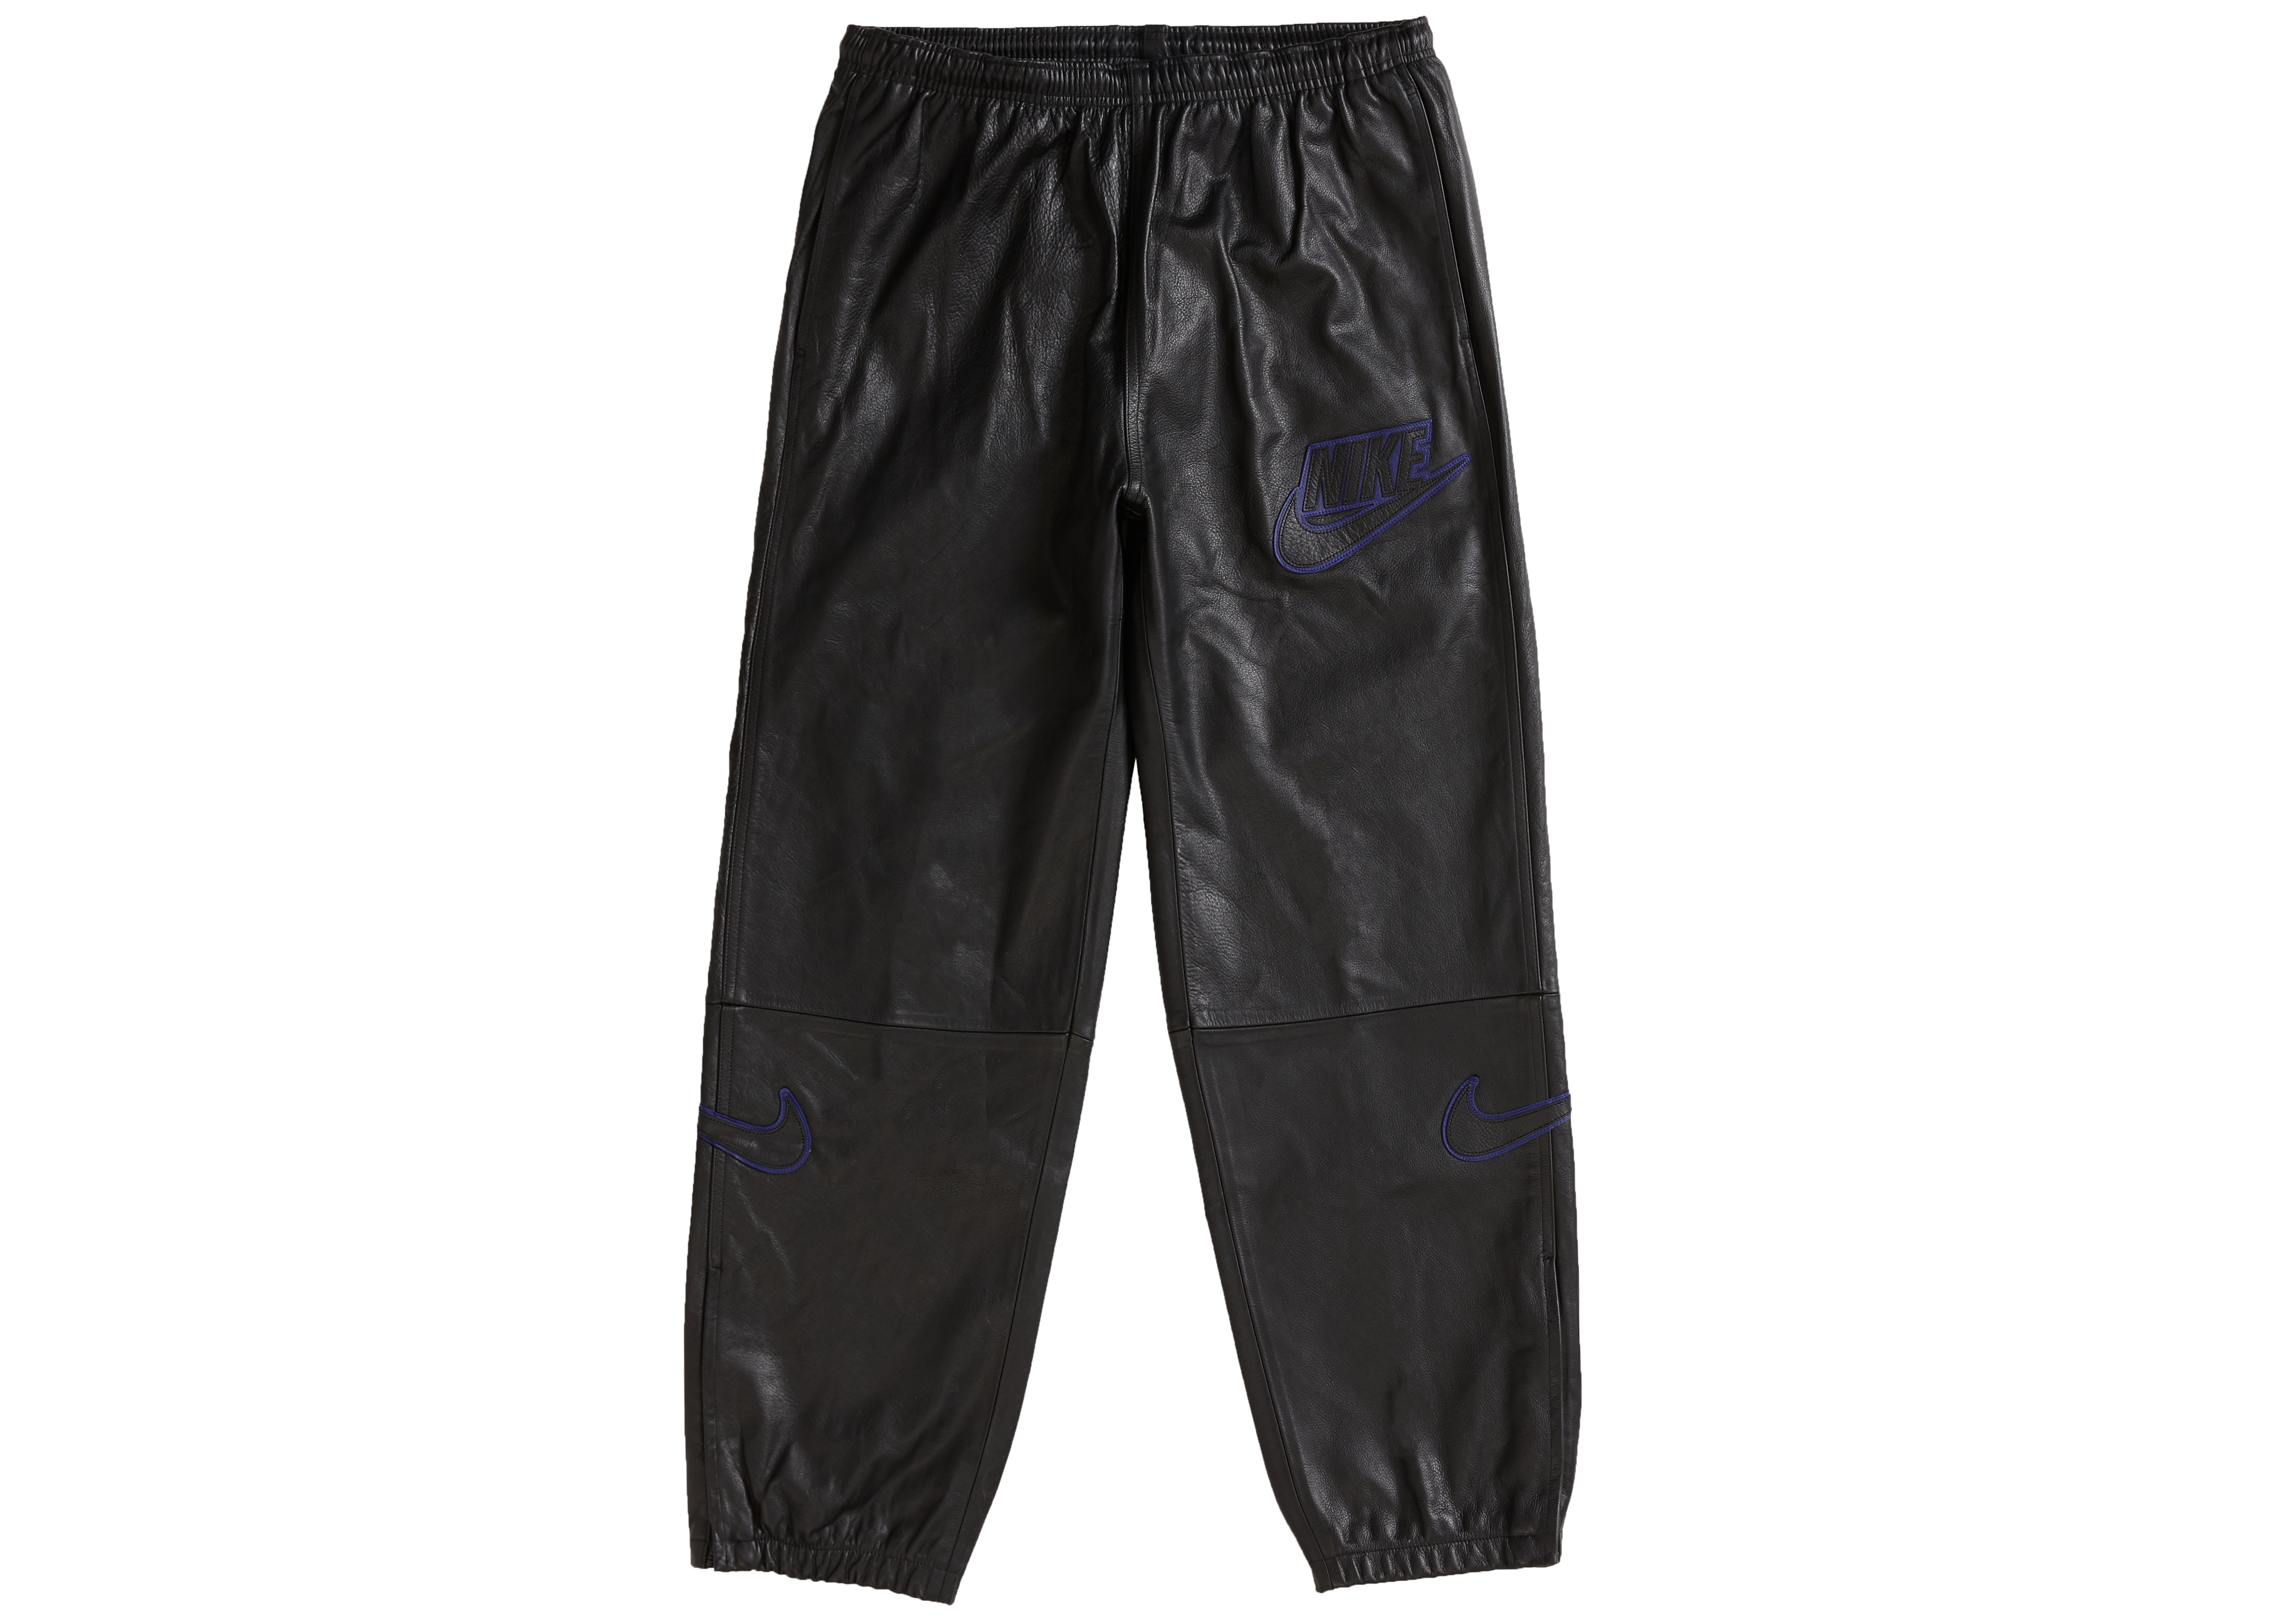 Supreme Nike Leather Warm Up Pant Black Men's - FW19 - US